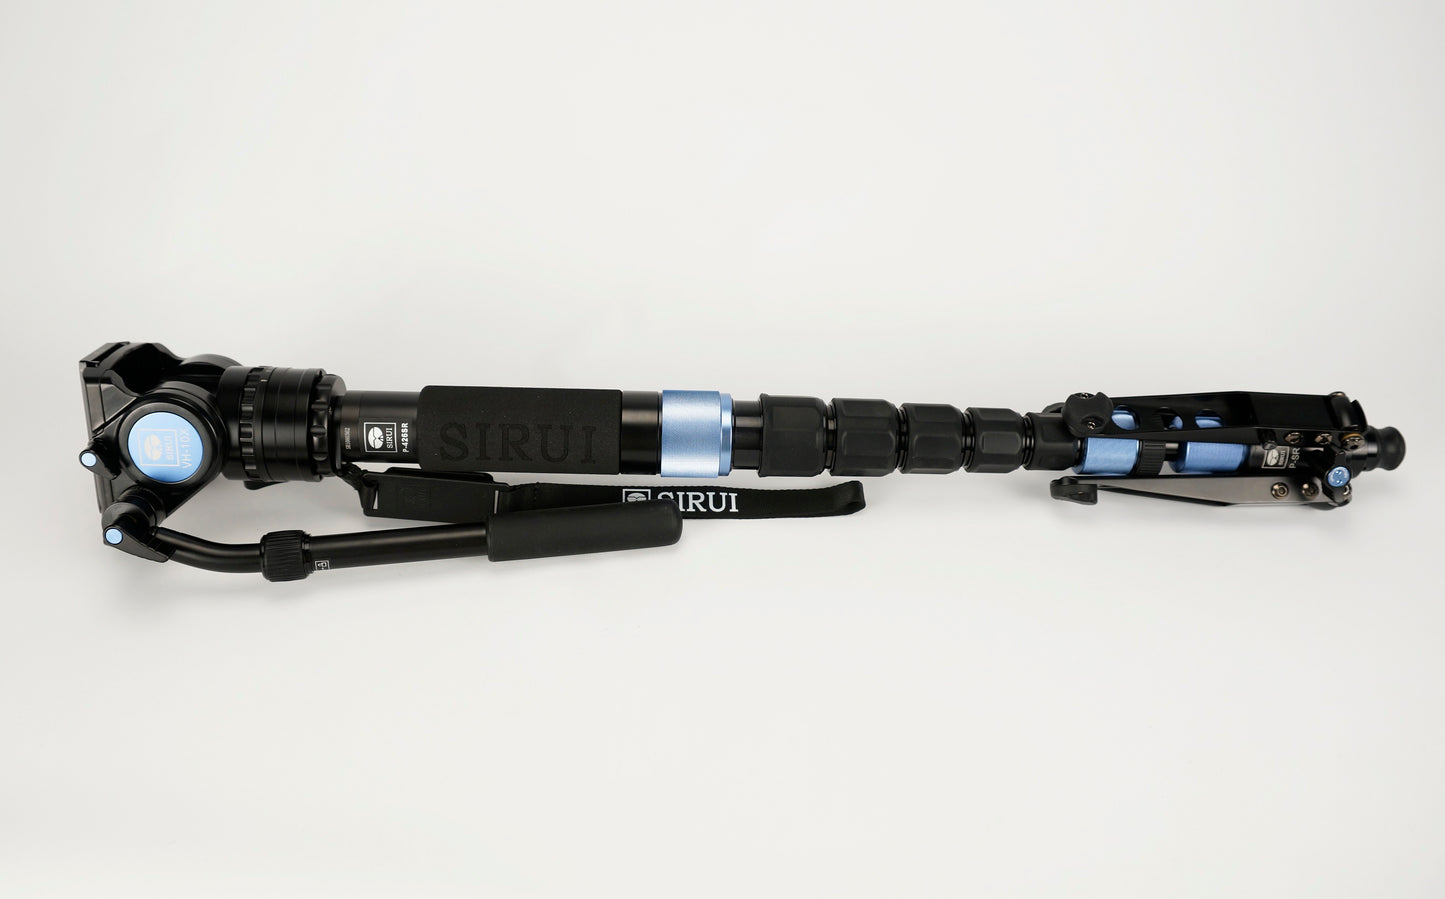 Sirui P-426SR and VH-10X Head Carbon Fiber Photo/Video Monopod Kit